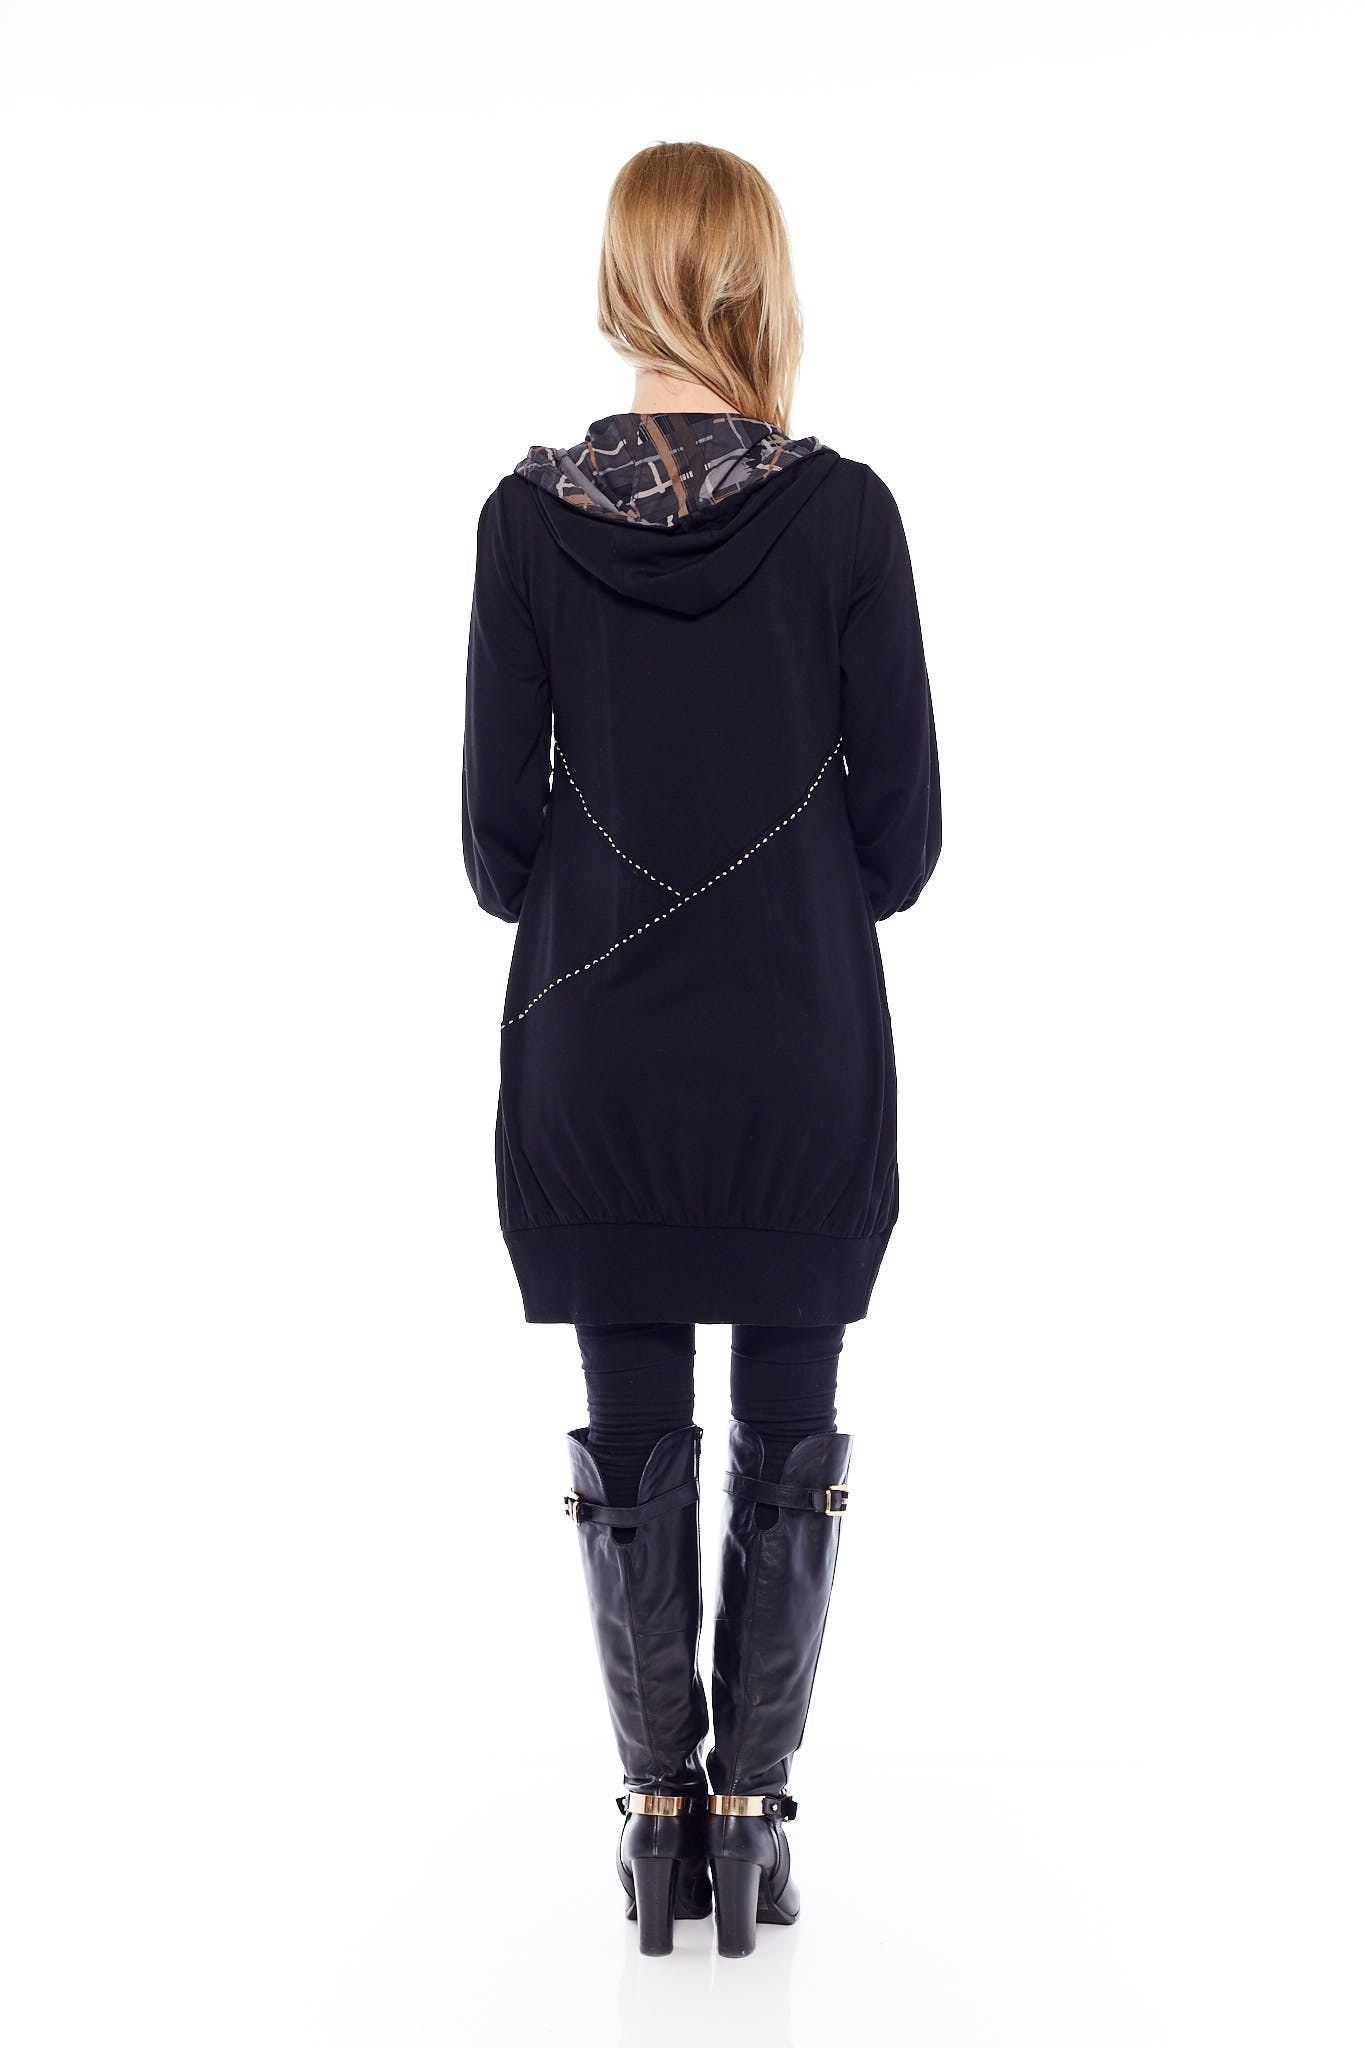 Buy Women's Winter Midi Long Sleeve Coats Online